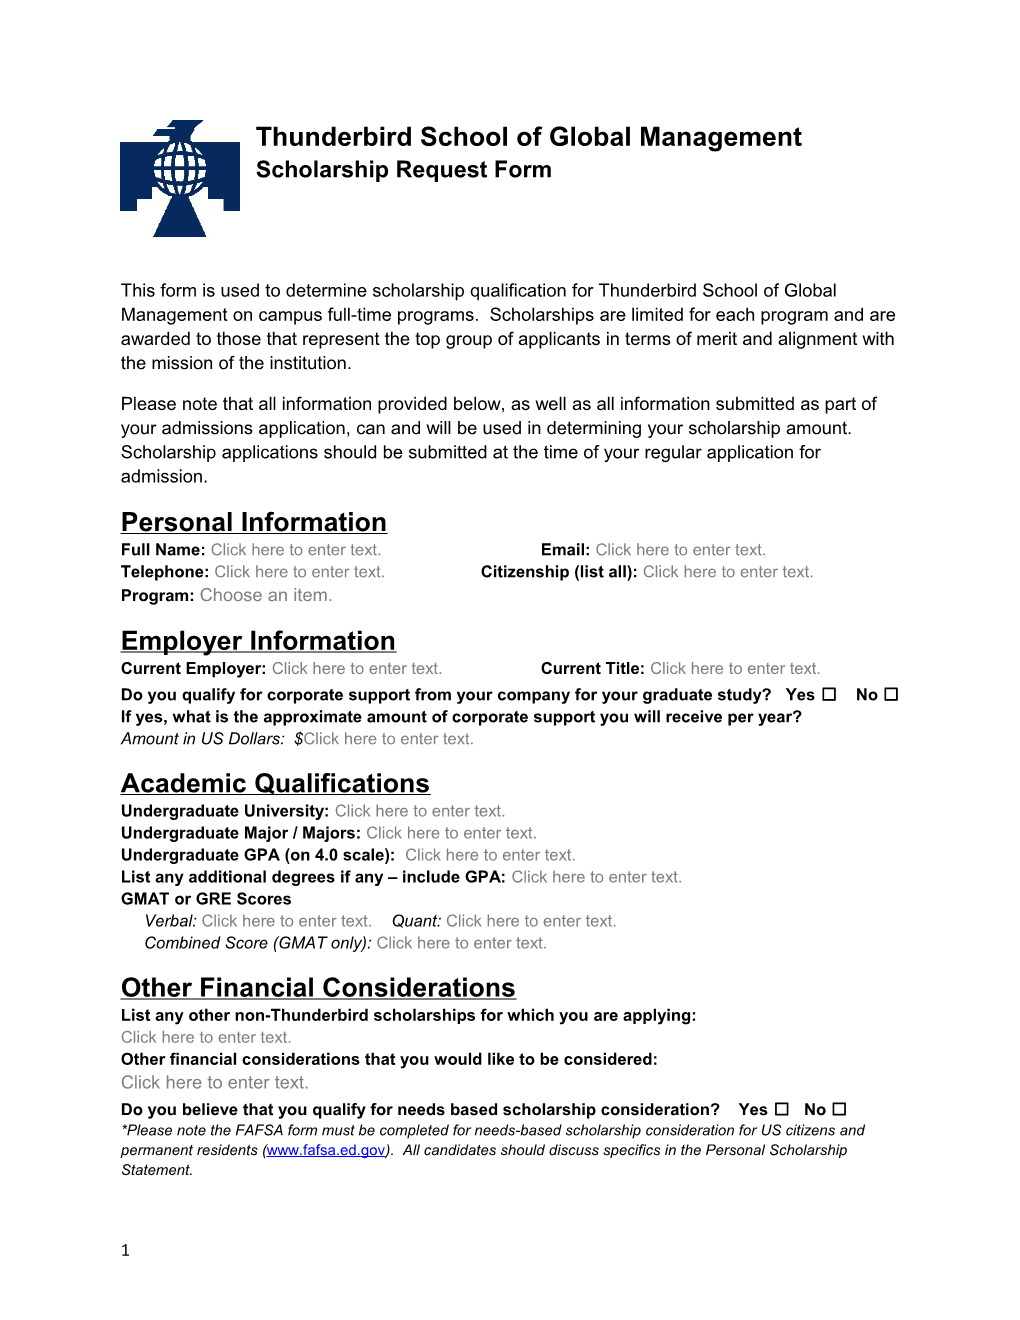 Thunderbird School of Global Management Scholarship Request Form